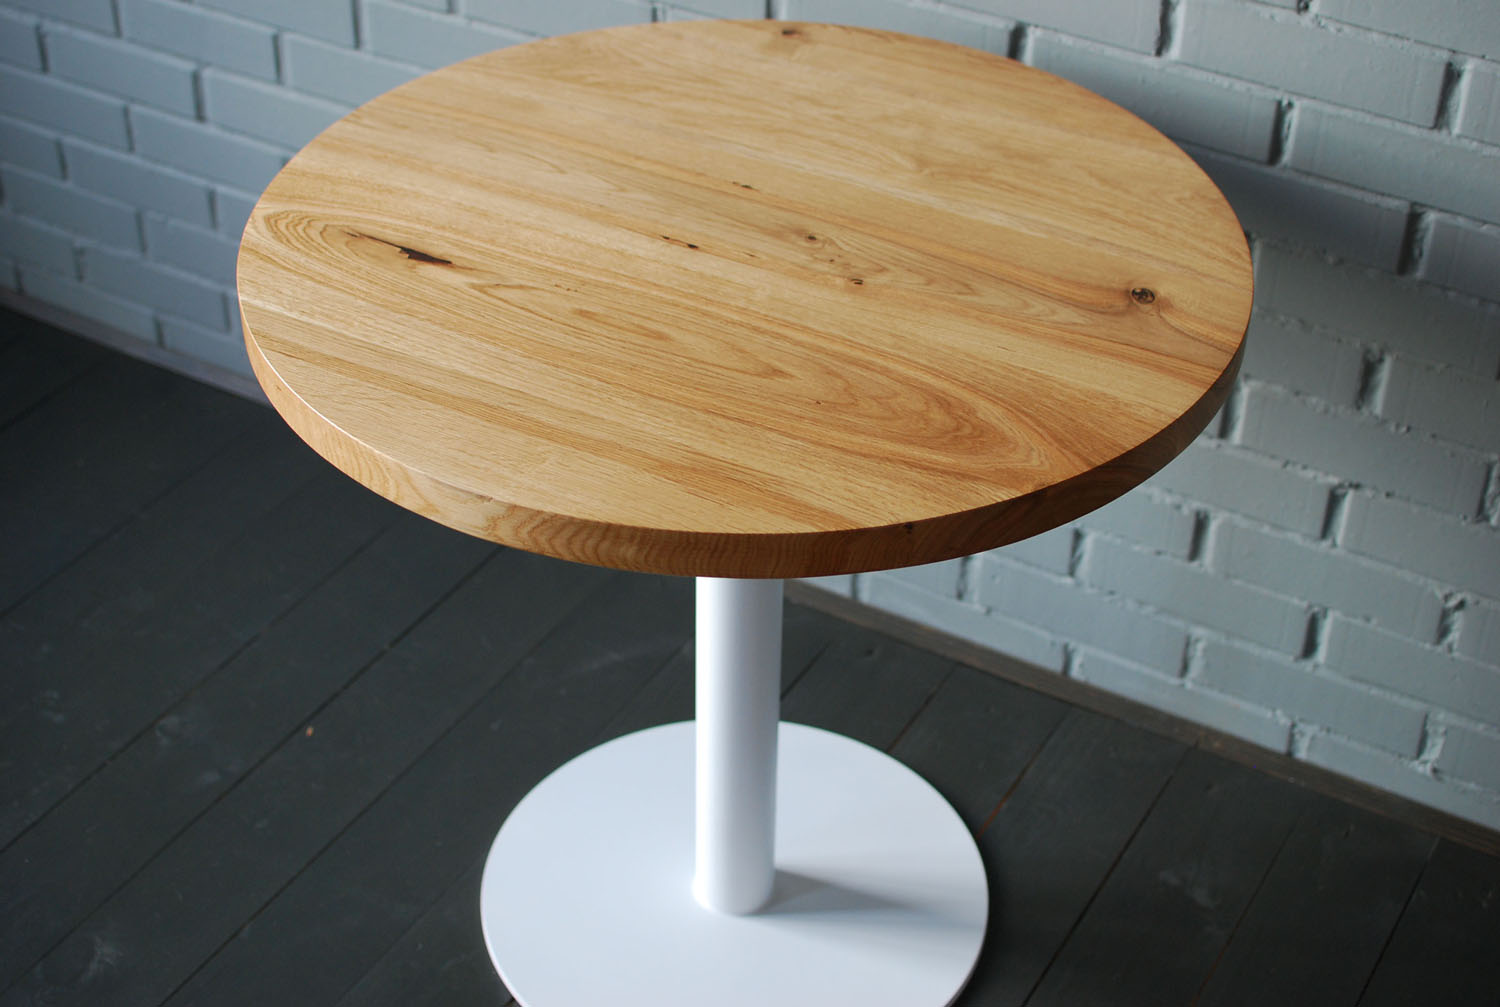 Стол круглый 1 м диаметр. Круглый стол 80см 80 см. Круглый столик из дерева. Круглый деревянный столик. Столешница круглая.